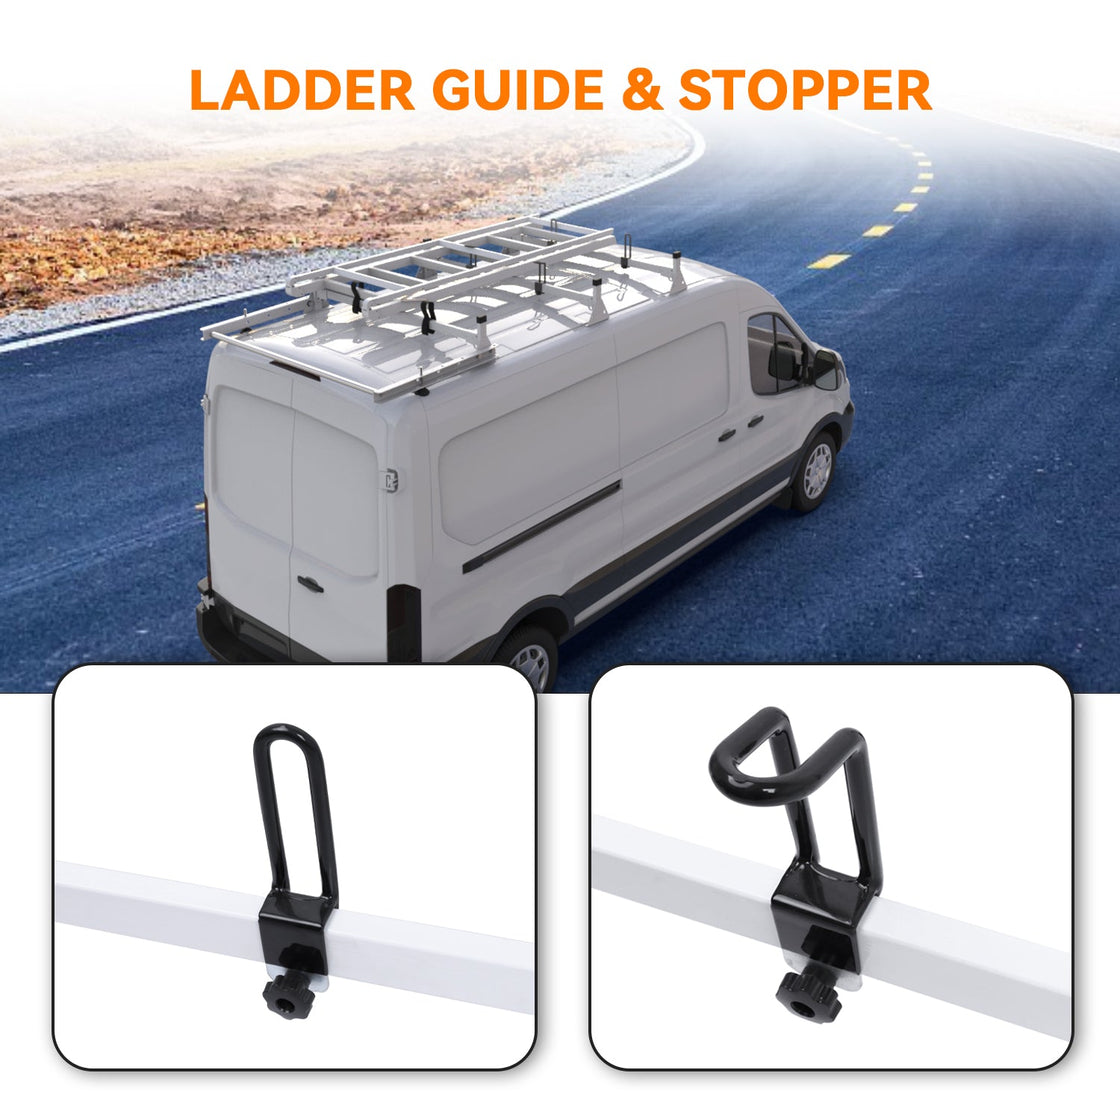 Melipron ladder rack for van with rear cargo roller-8